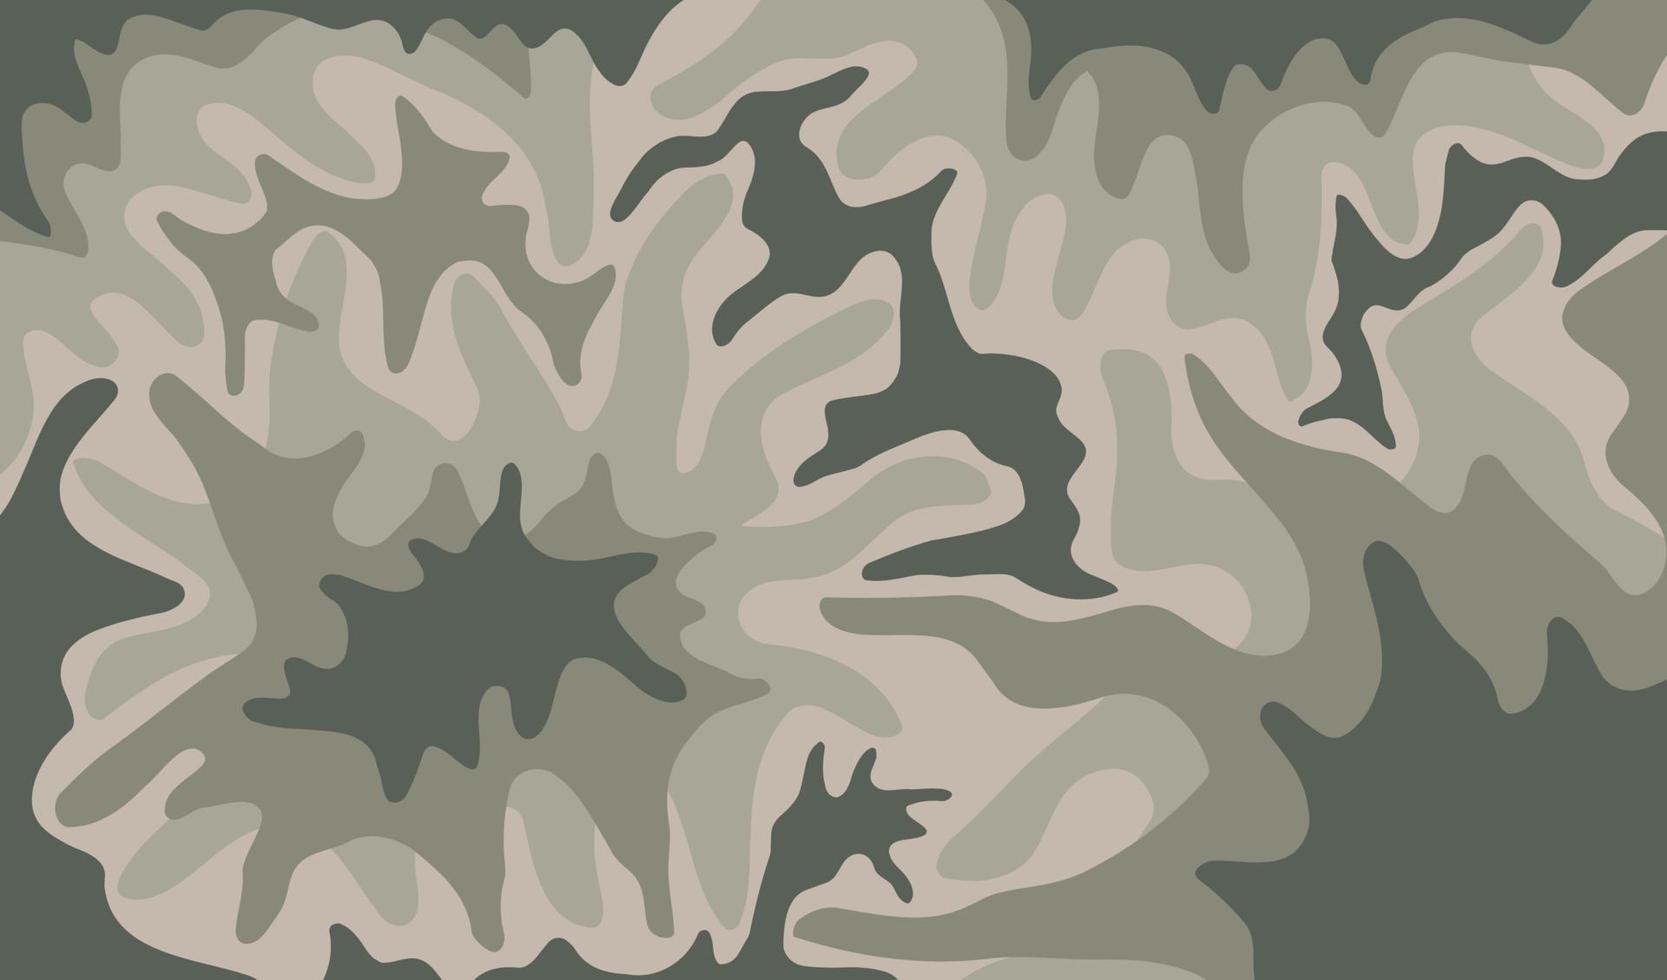 abstrakt kamouflage oss armé mönster soldat bred bakgrund vektor